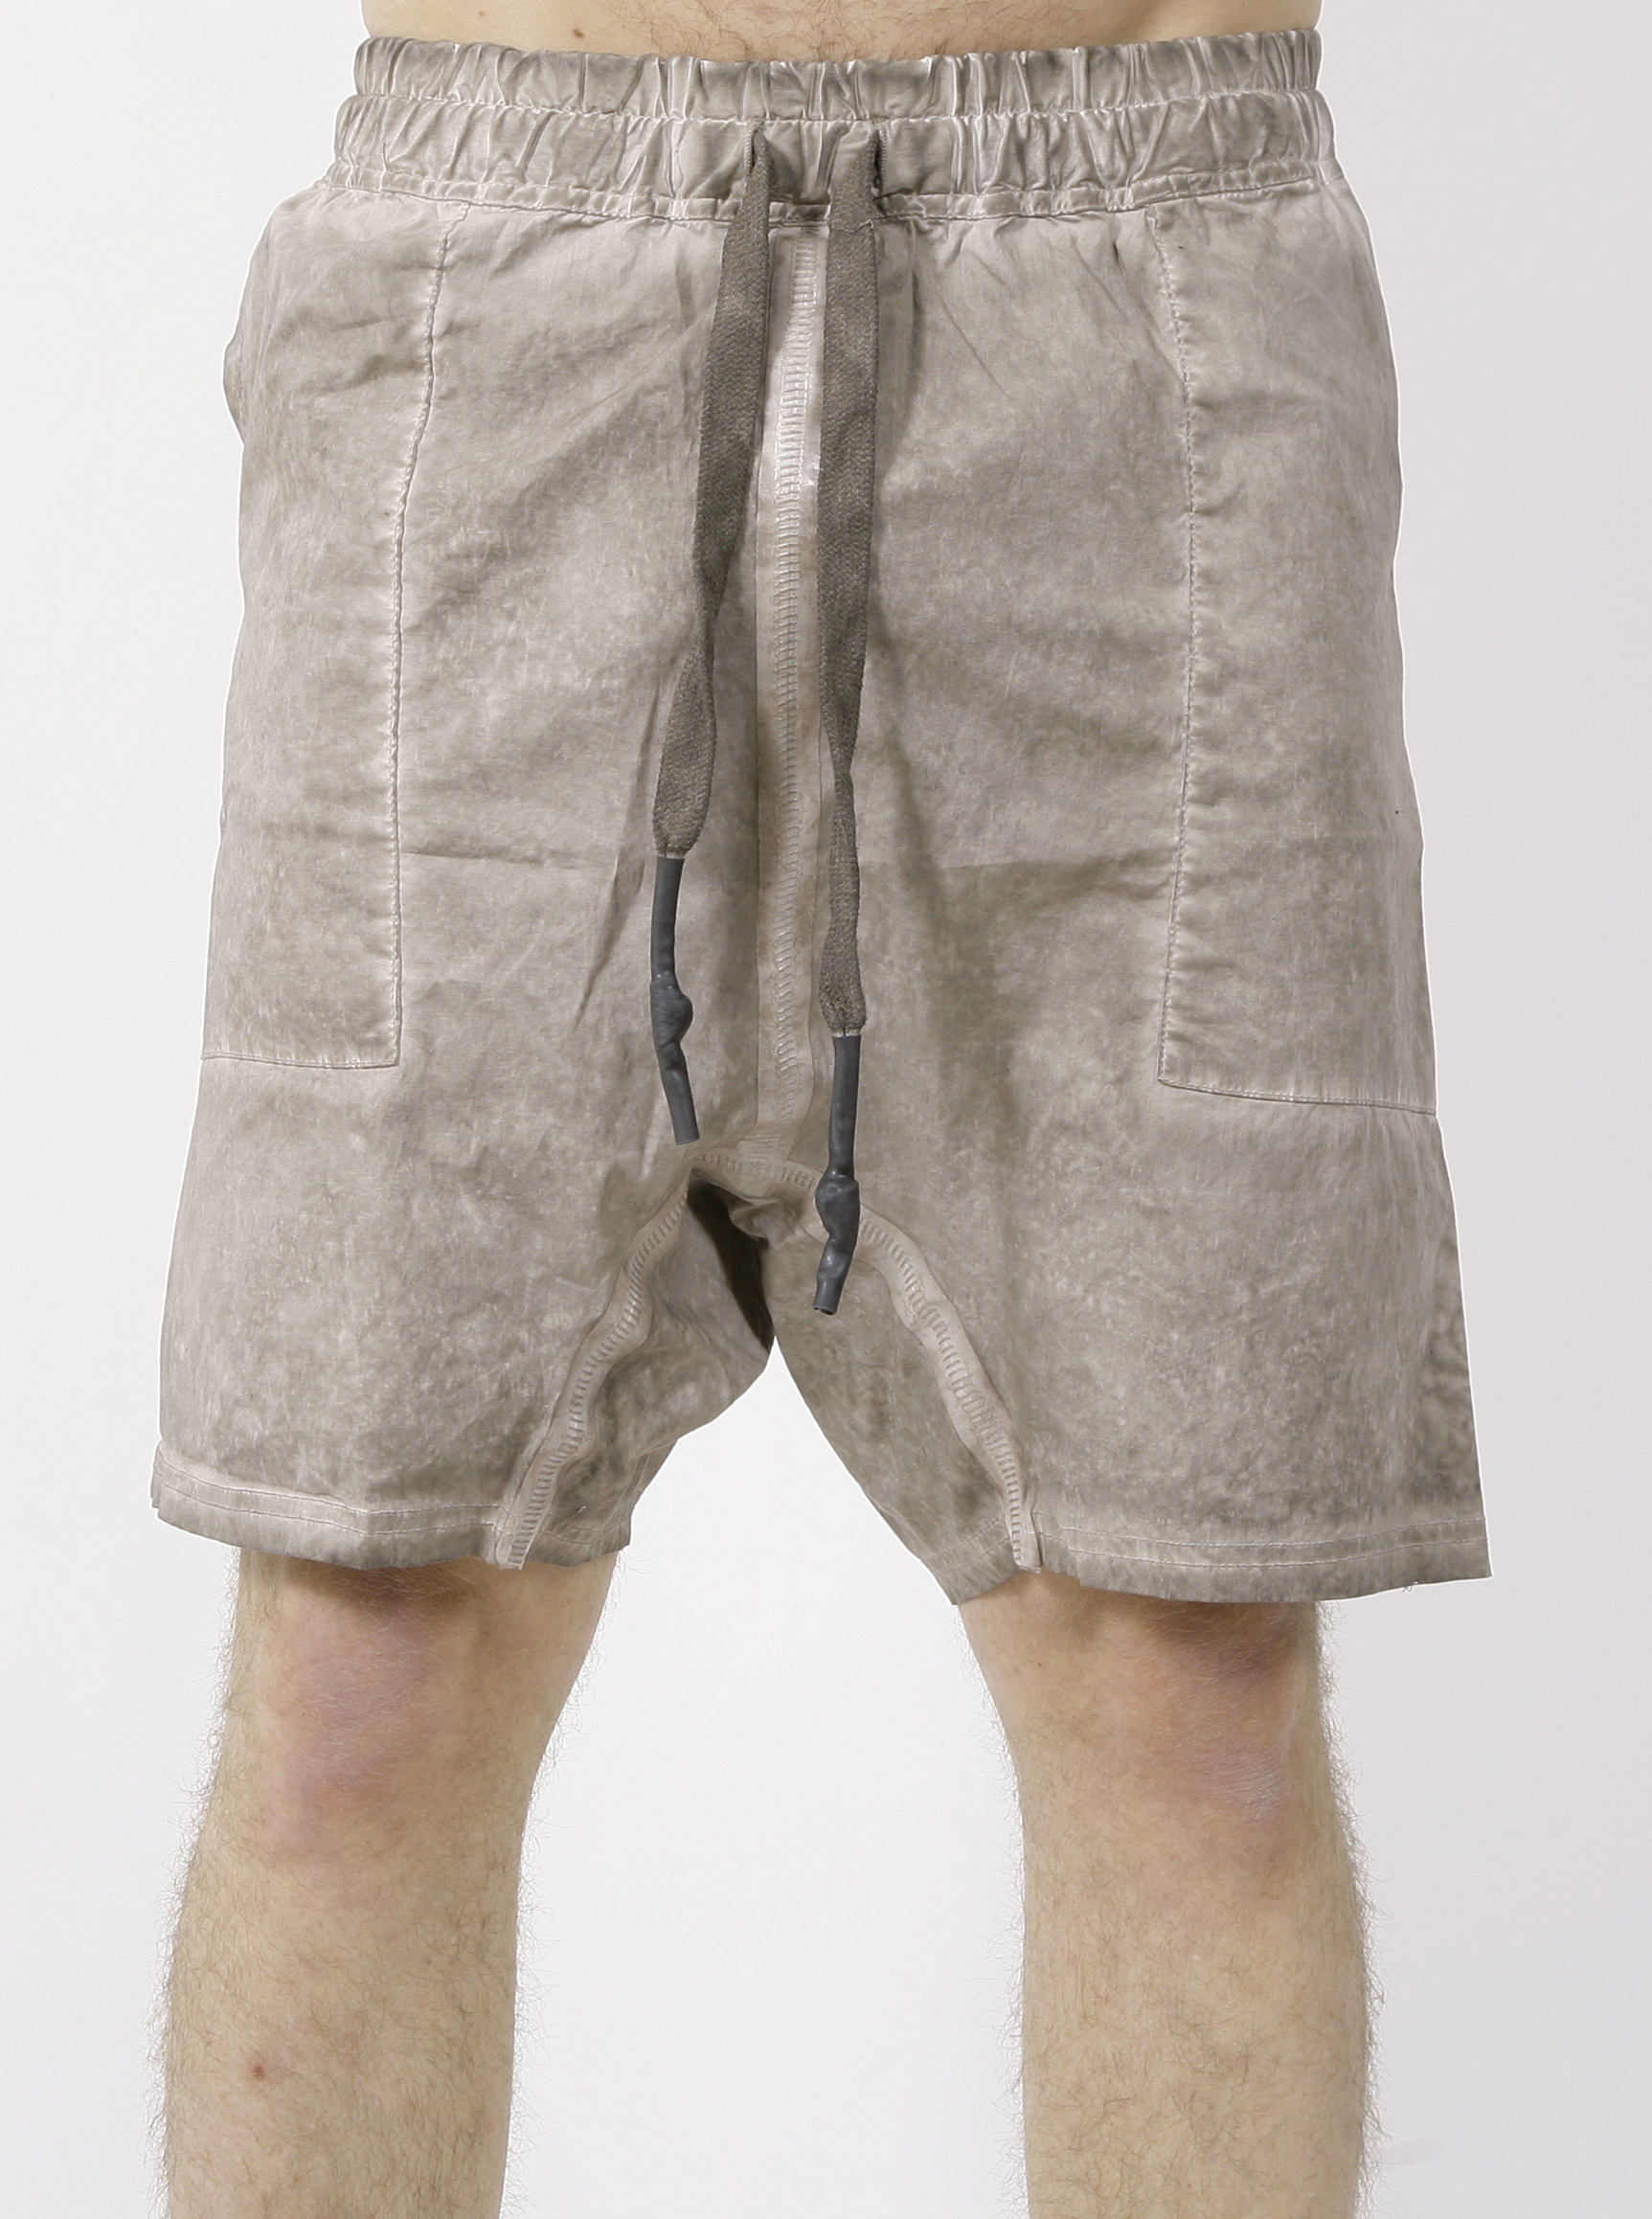 White Baggy Shorts Men - Junus Coban Drop Crotch Shorts